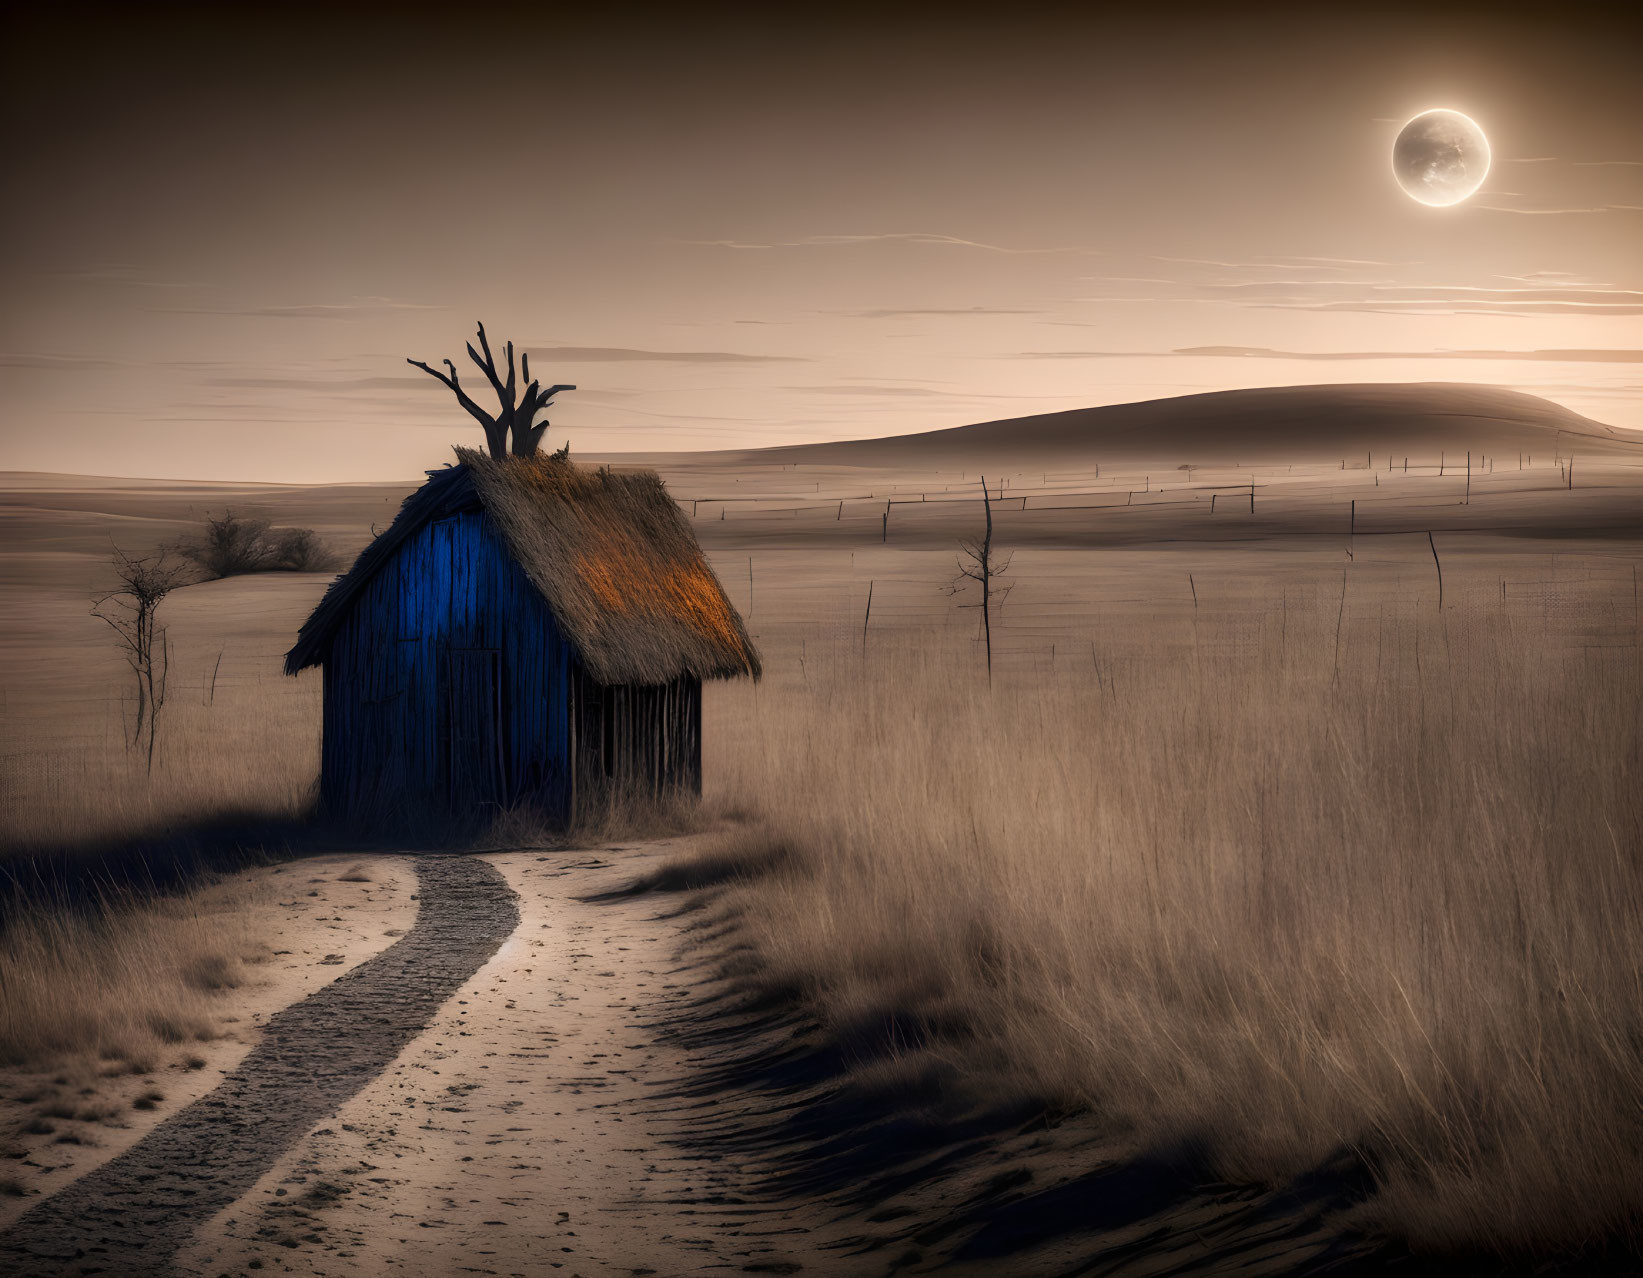 Blue Wooden Hut in Golden Field under Moonlit Sky